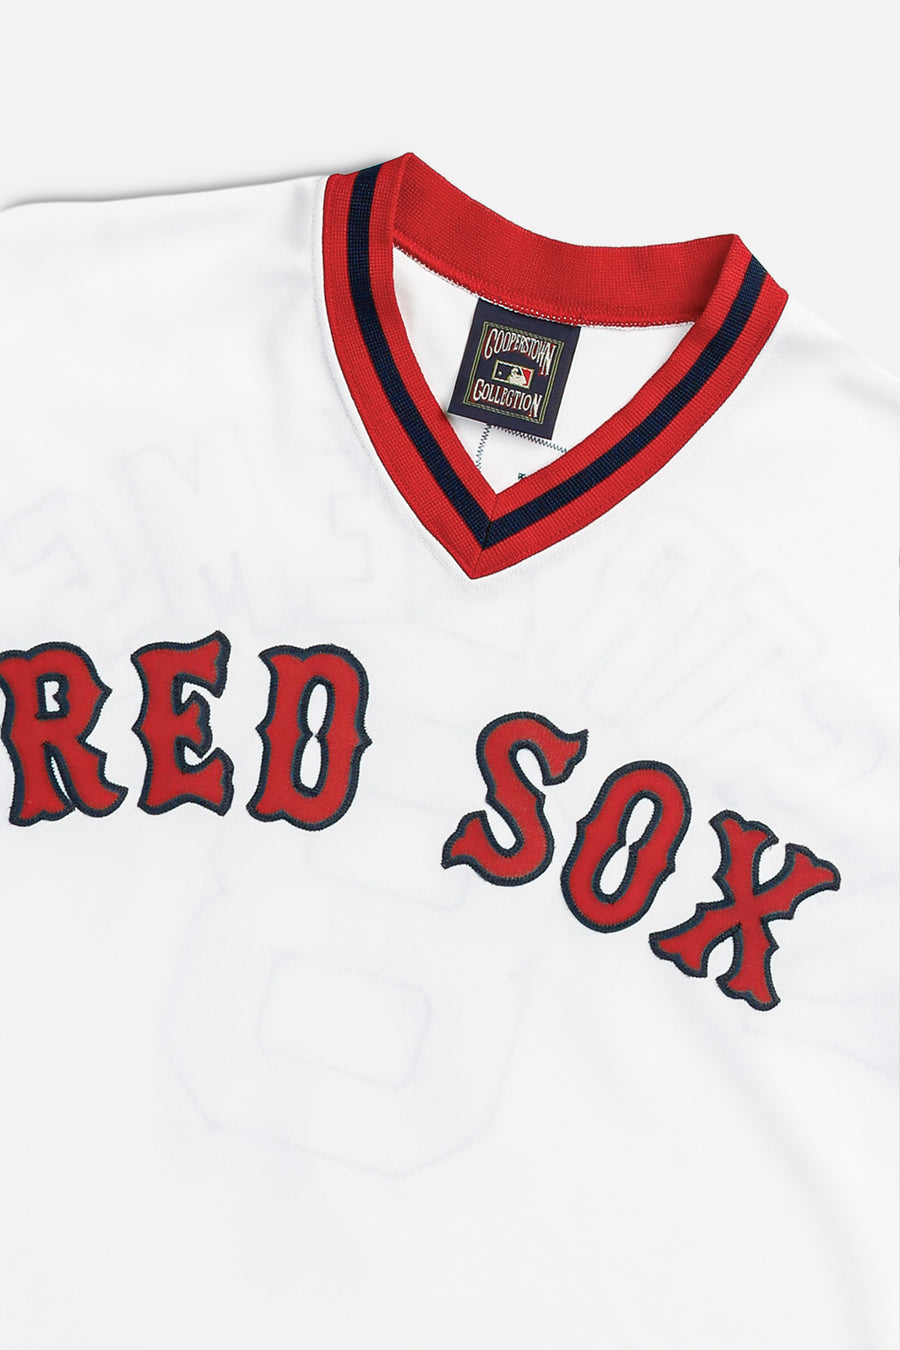 Vintage Boston Red Sox MLB Jersey - XL